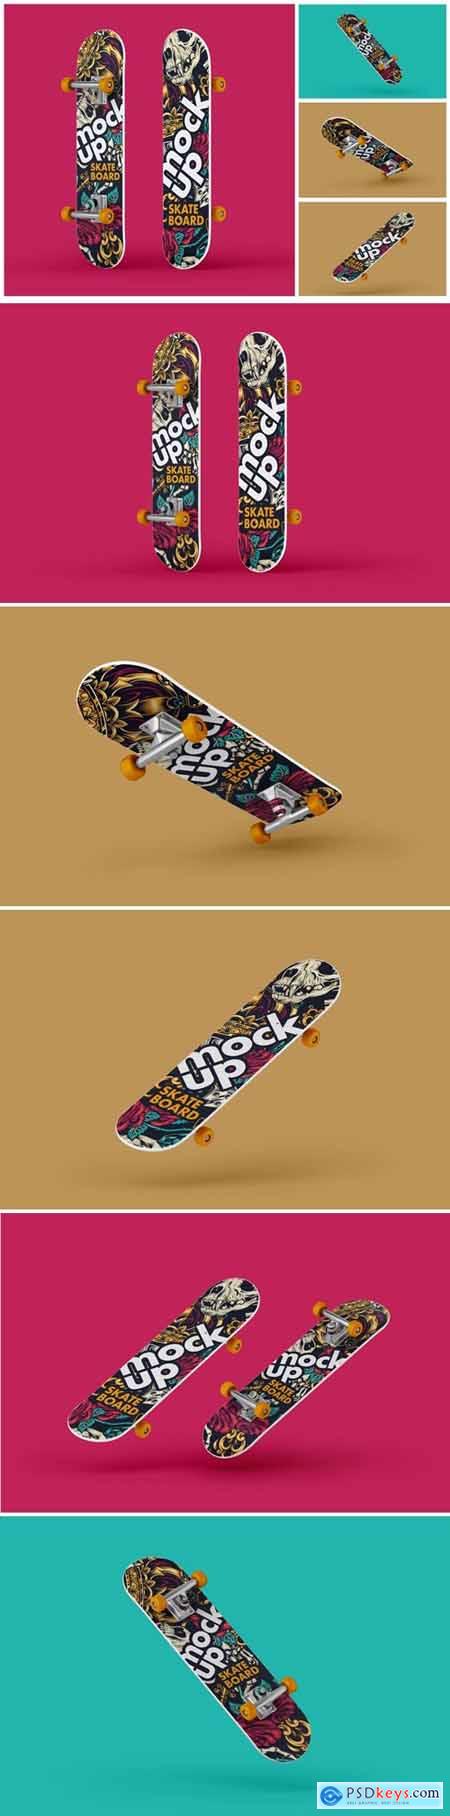 Skateboard Mockup Set